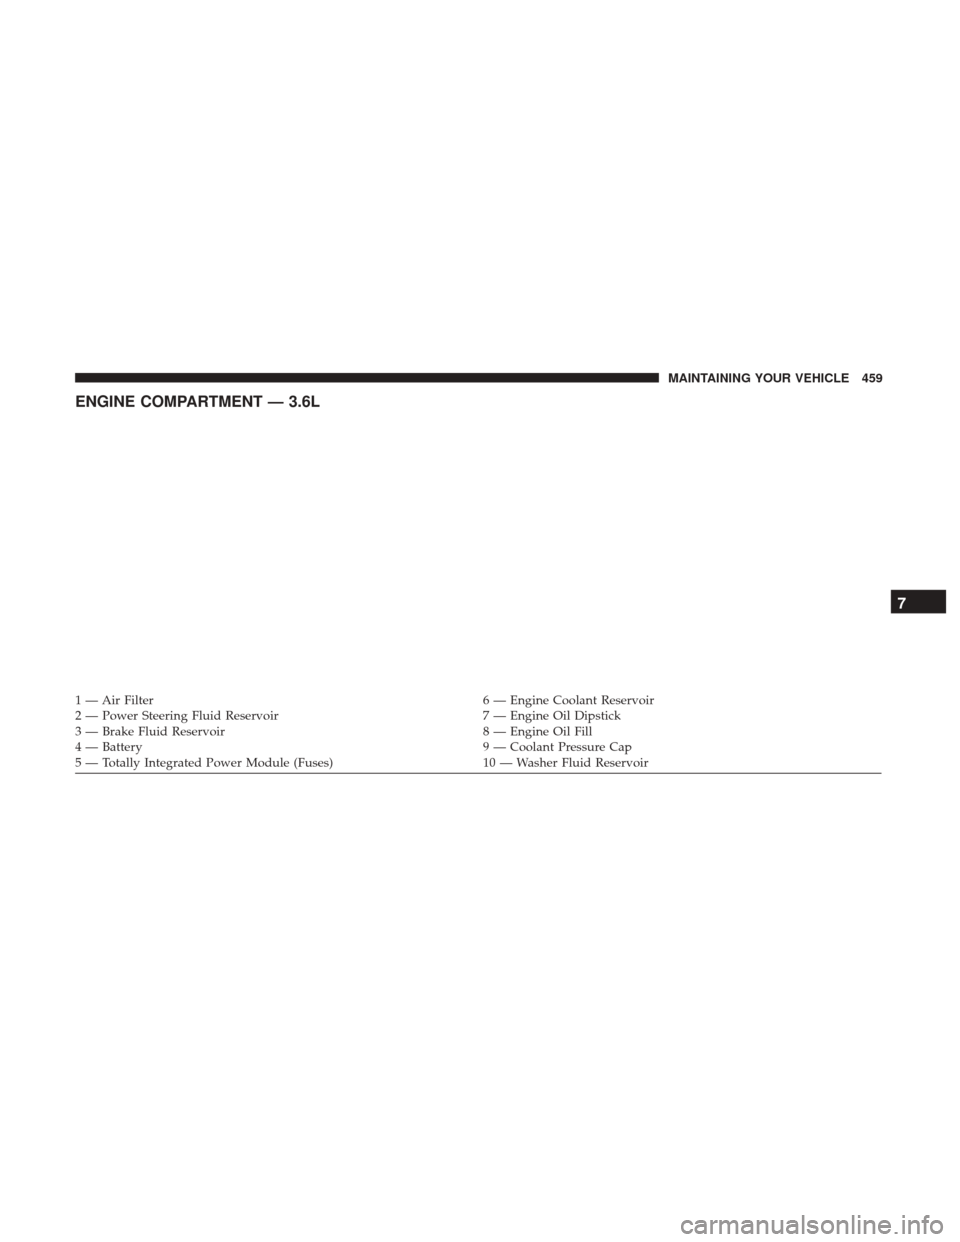 DODGE GRAND CARAVAN 2017 5.G Owners Manual ENGINE COMPARTMENT — 3.6L
1 — Air Filter6 — Engine Coolant Reservoir
2 — Power Steering Fluid Reservoir 7 — Engine Oil Dipstick
3 — Brake Fluid Reservoir 8 — Engine Oil Fill
4 — Batter